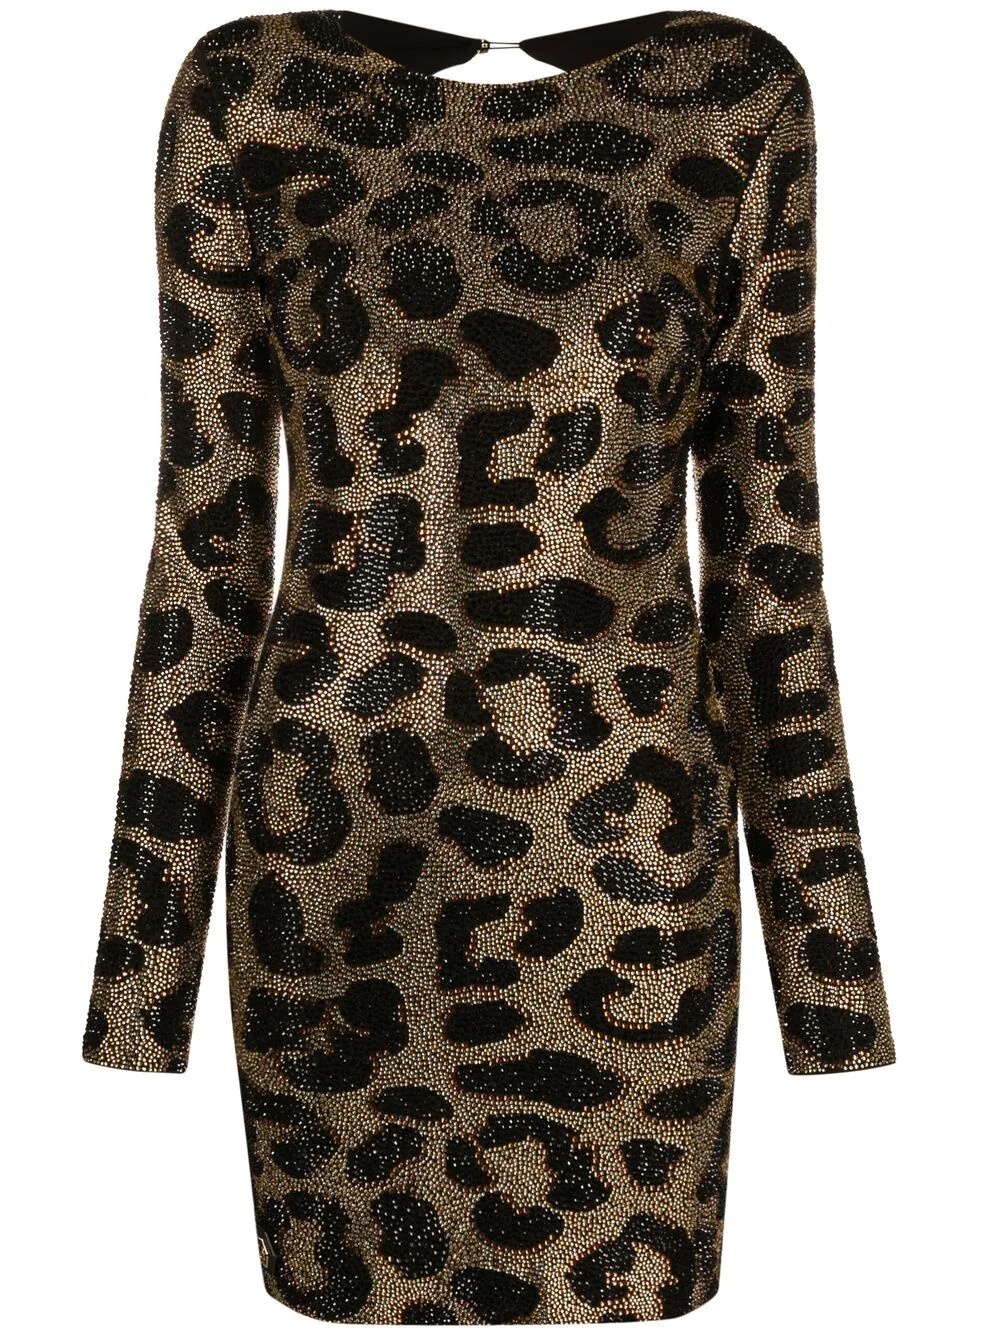 leopard-print studded dress - 1